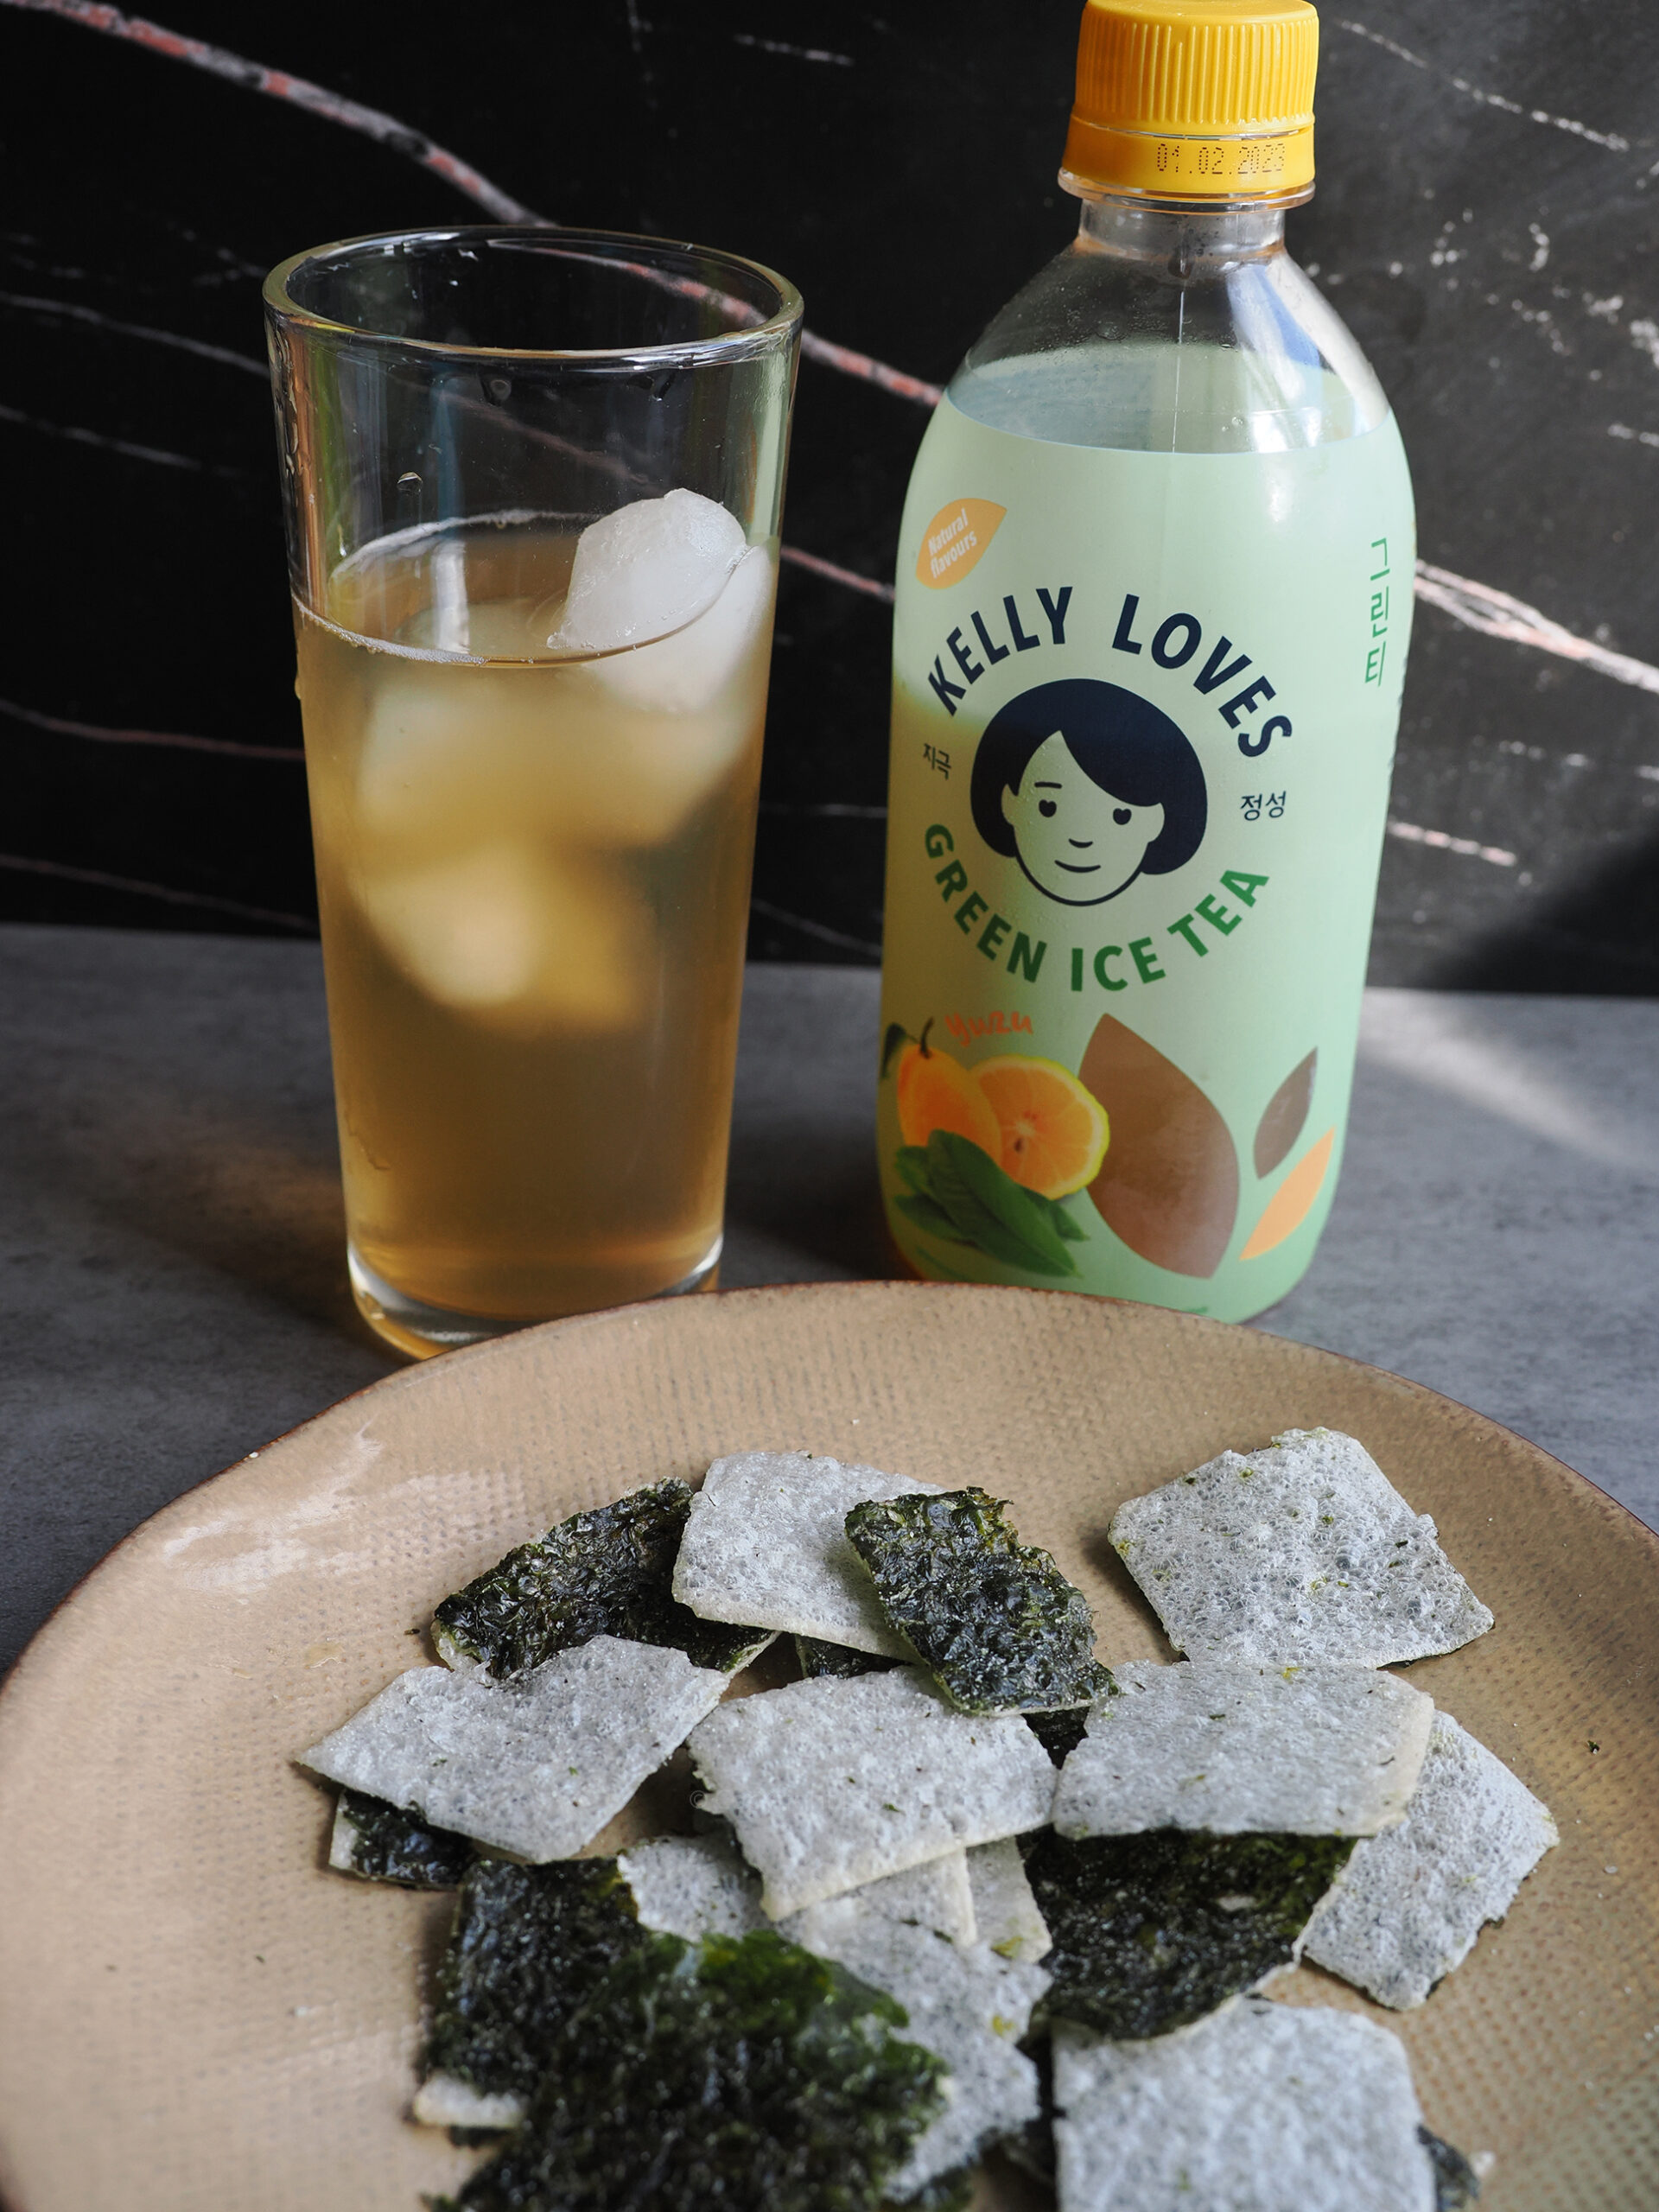 Kelly Loves yuzu tea bottle with seaweed crisp